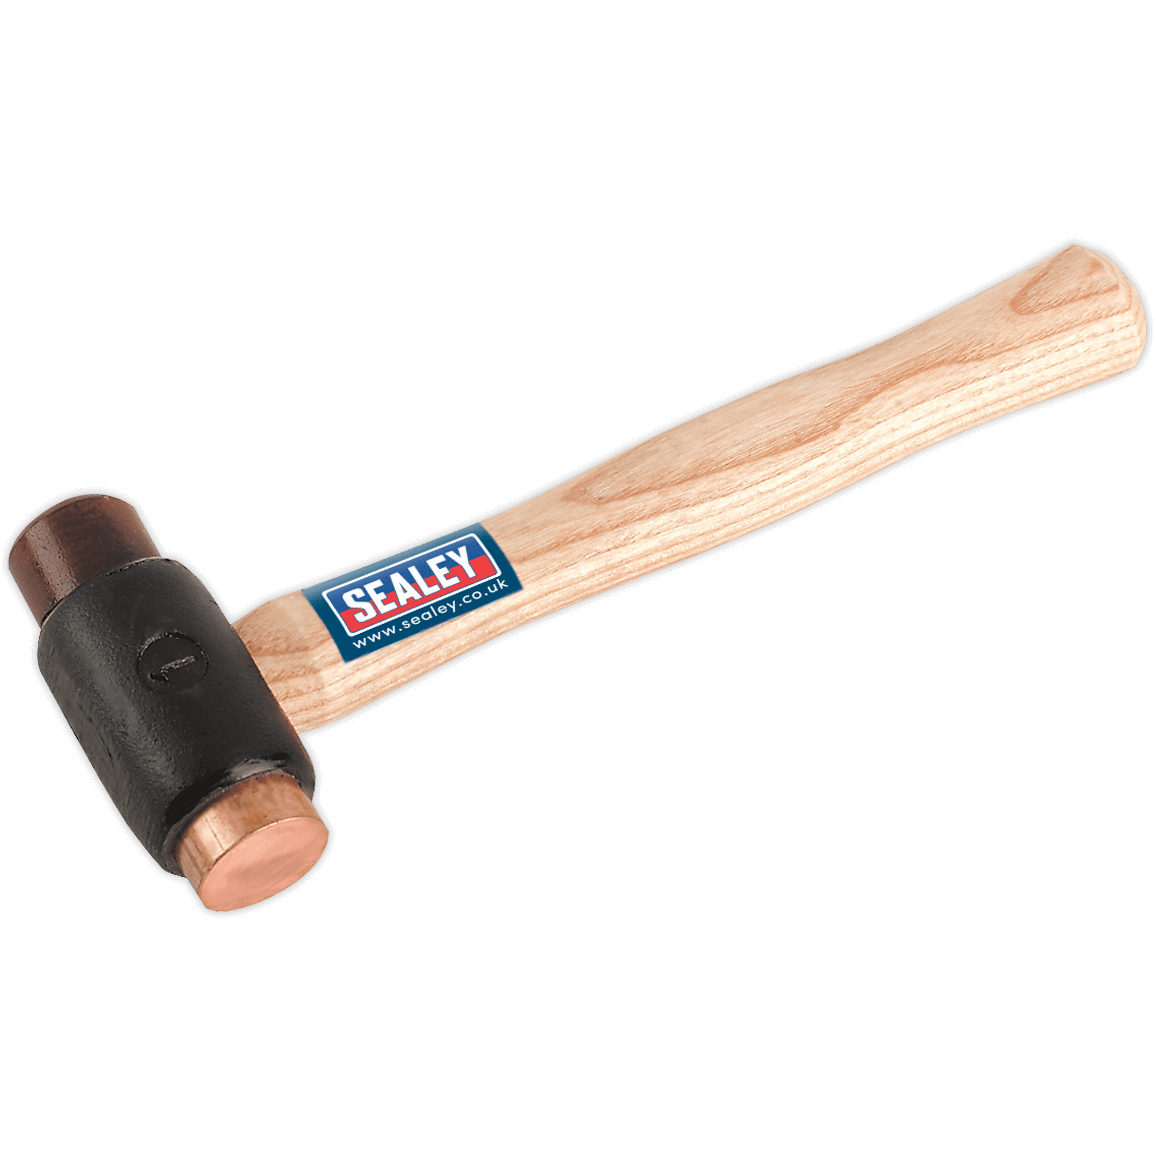 Sealey Copper/ Rawhide Faced Hammer 680g